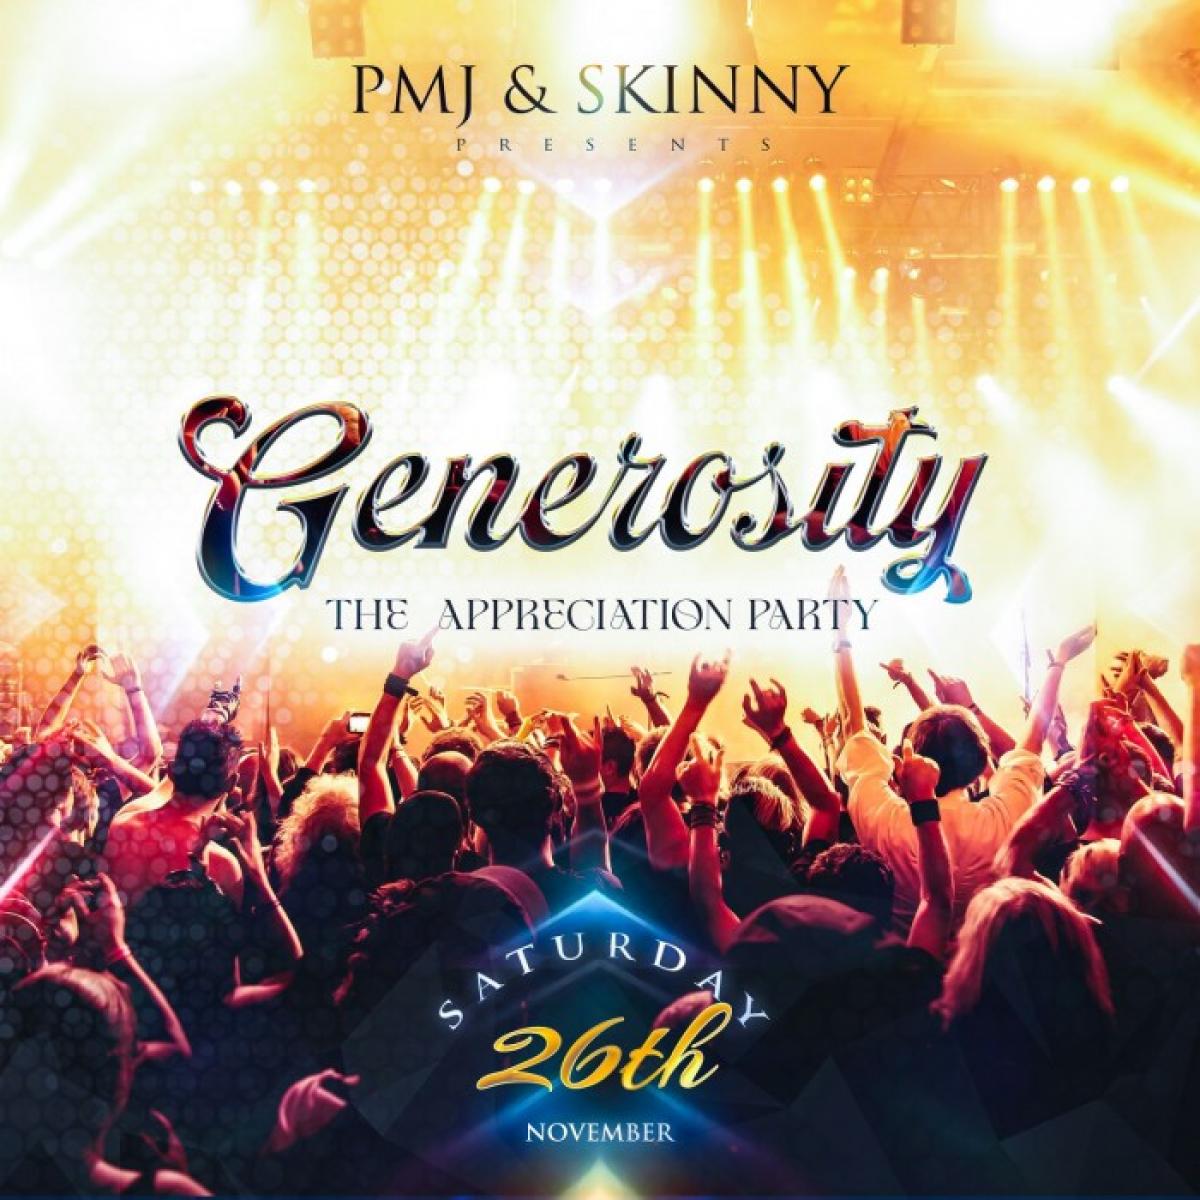 Generosity: The Appreciation Party flyer or graphic.